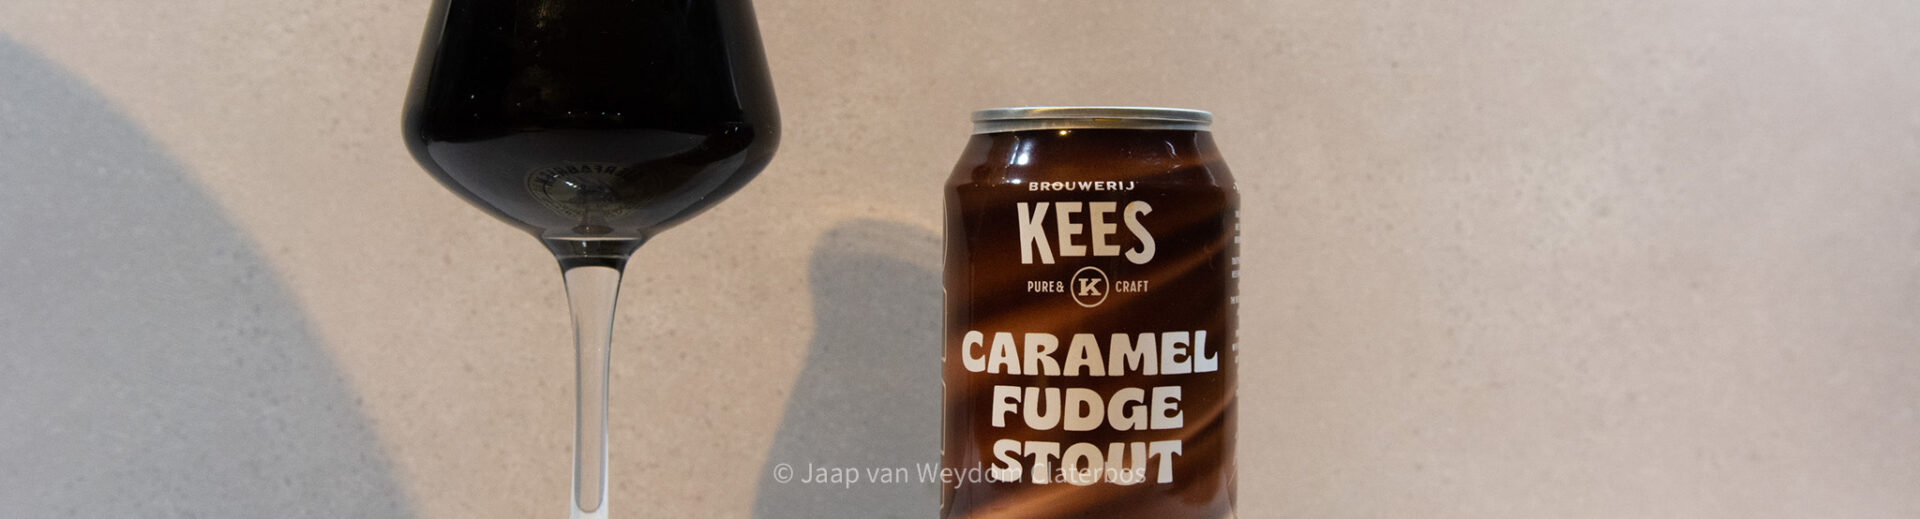 Caramel Fudge Stout - Brouwerij Kees